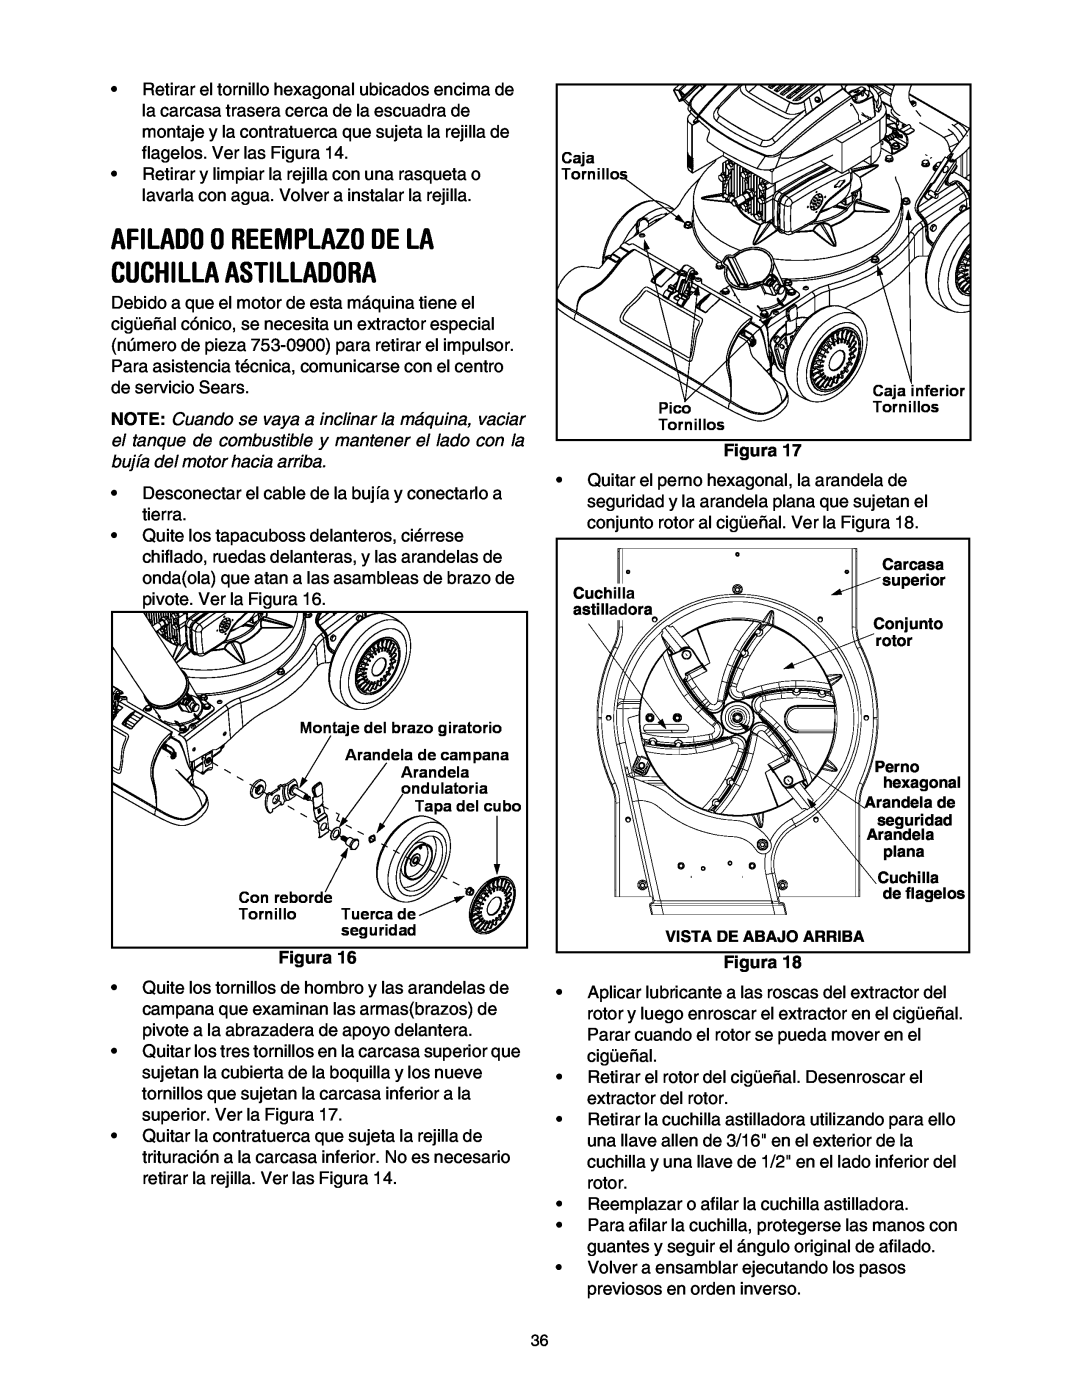 Sears 247.77055 operating instructions Afilado O Reemplazo De La Cuchilla Astilladora 